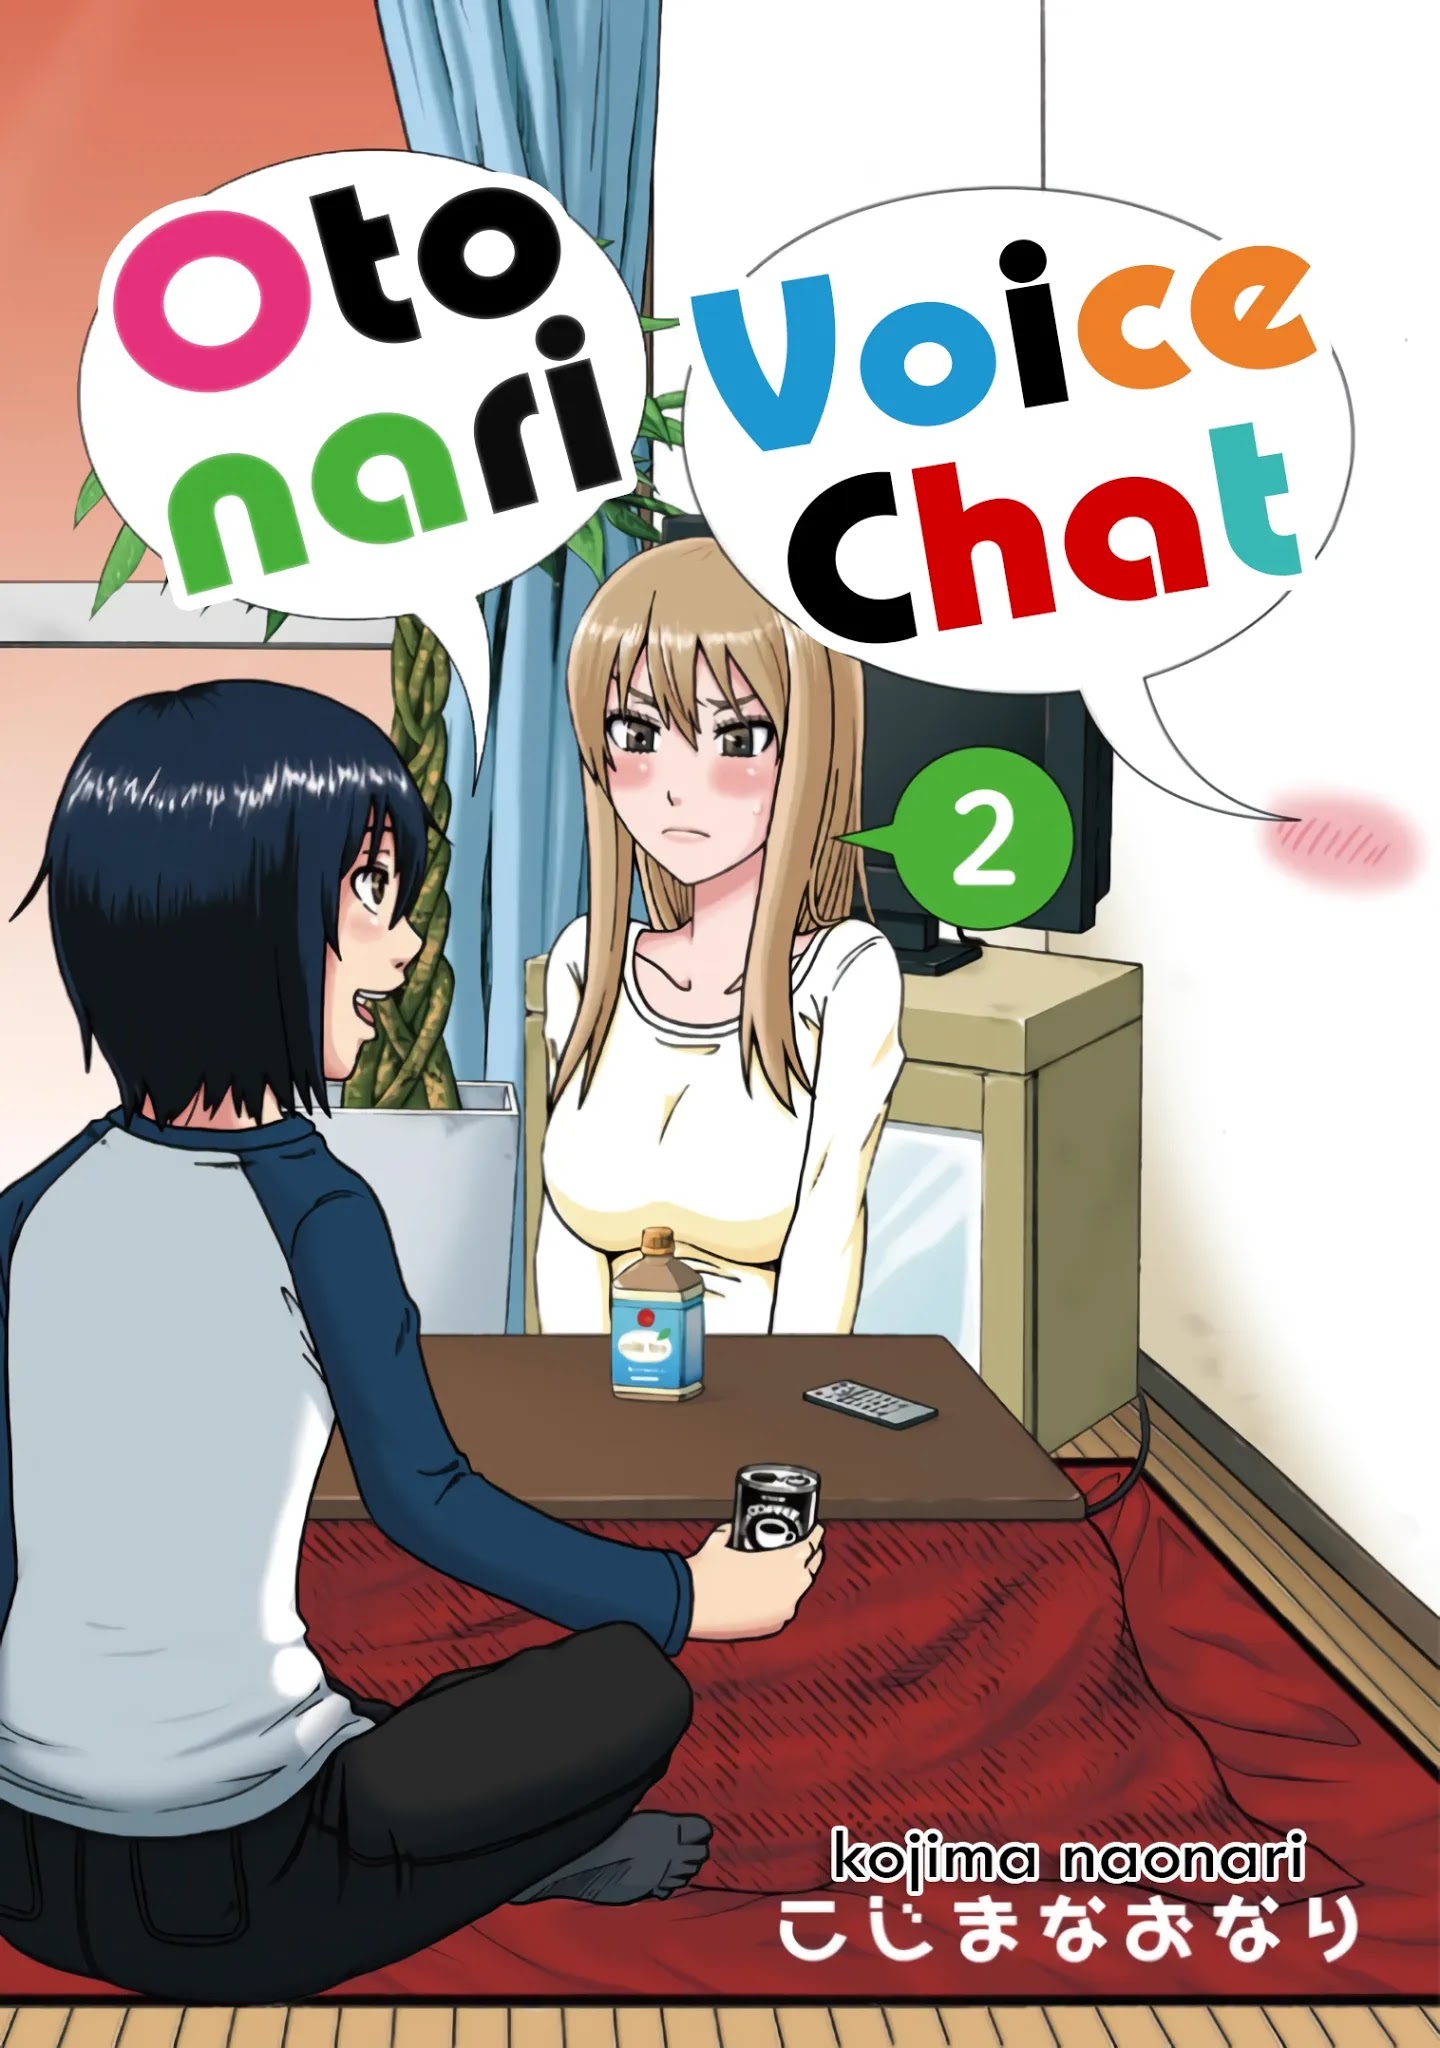 Otonari Voice Chat - Page 2